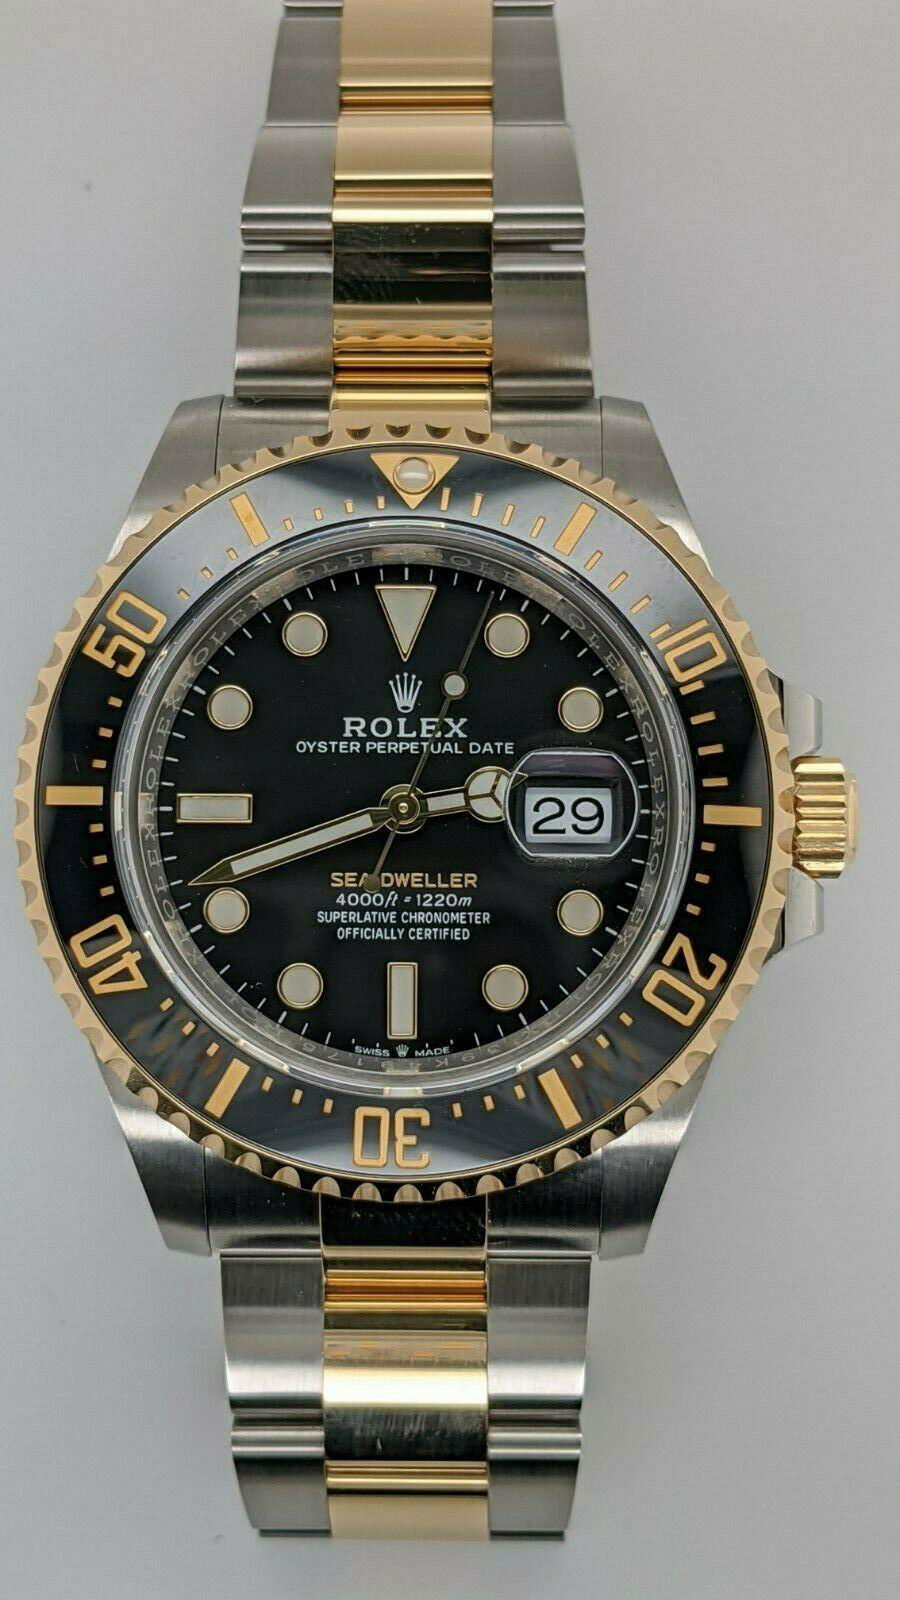 2020 Rolex Sea-Dweller 18K Yellow Gold & Stainless Steel & Ceramic Watch -126603 4